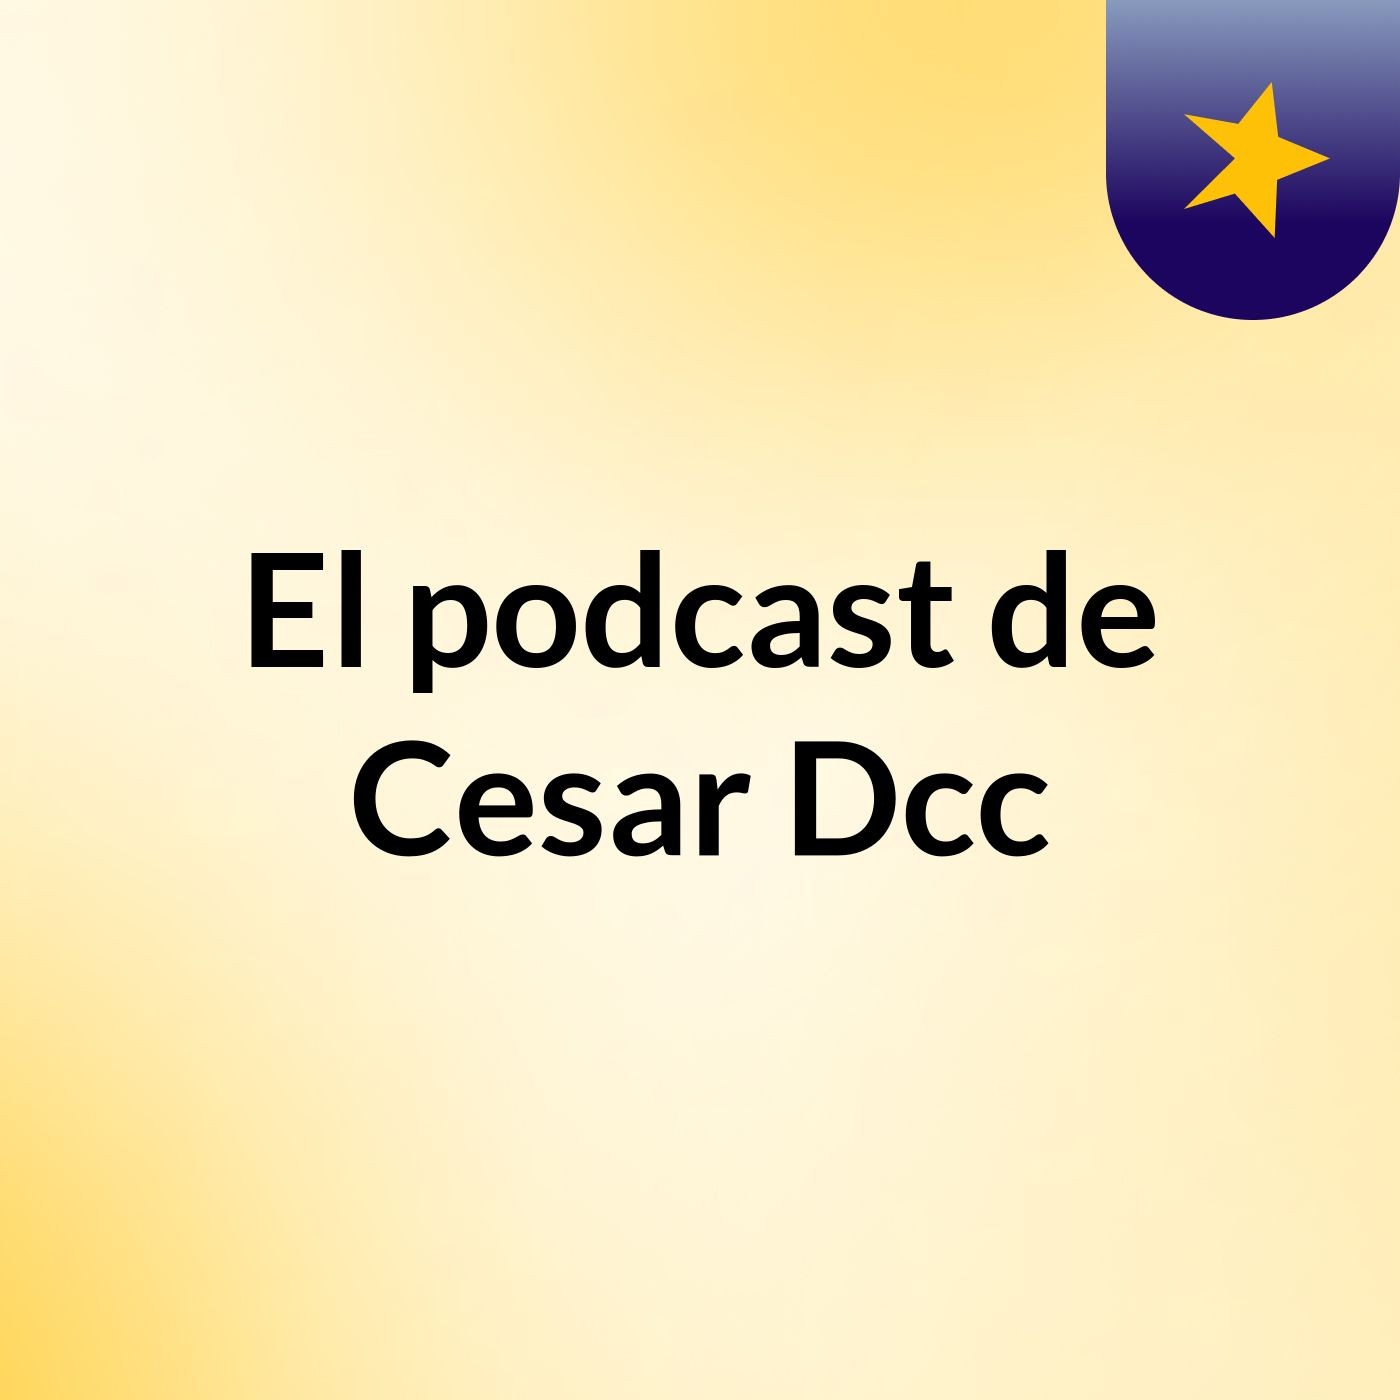 Episodio 3 - El podcast de Cesar Dcc